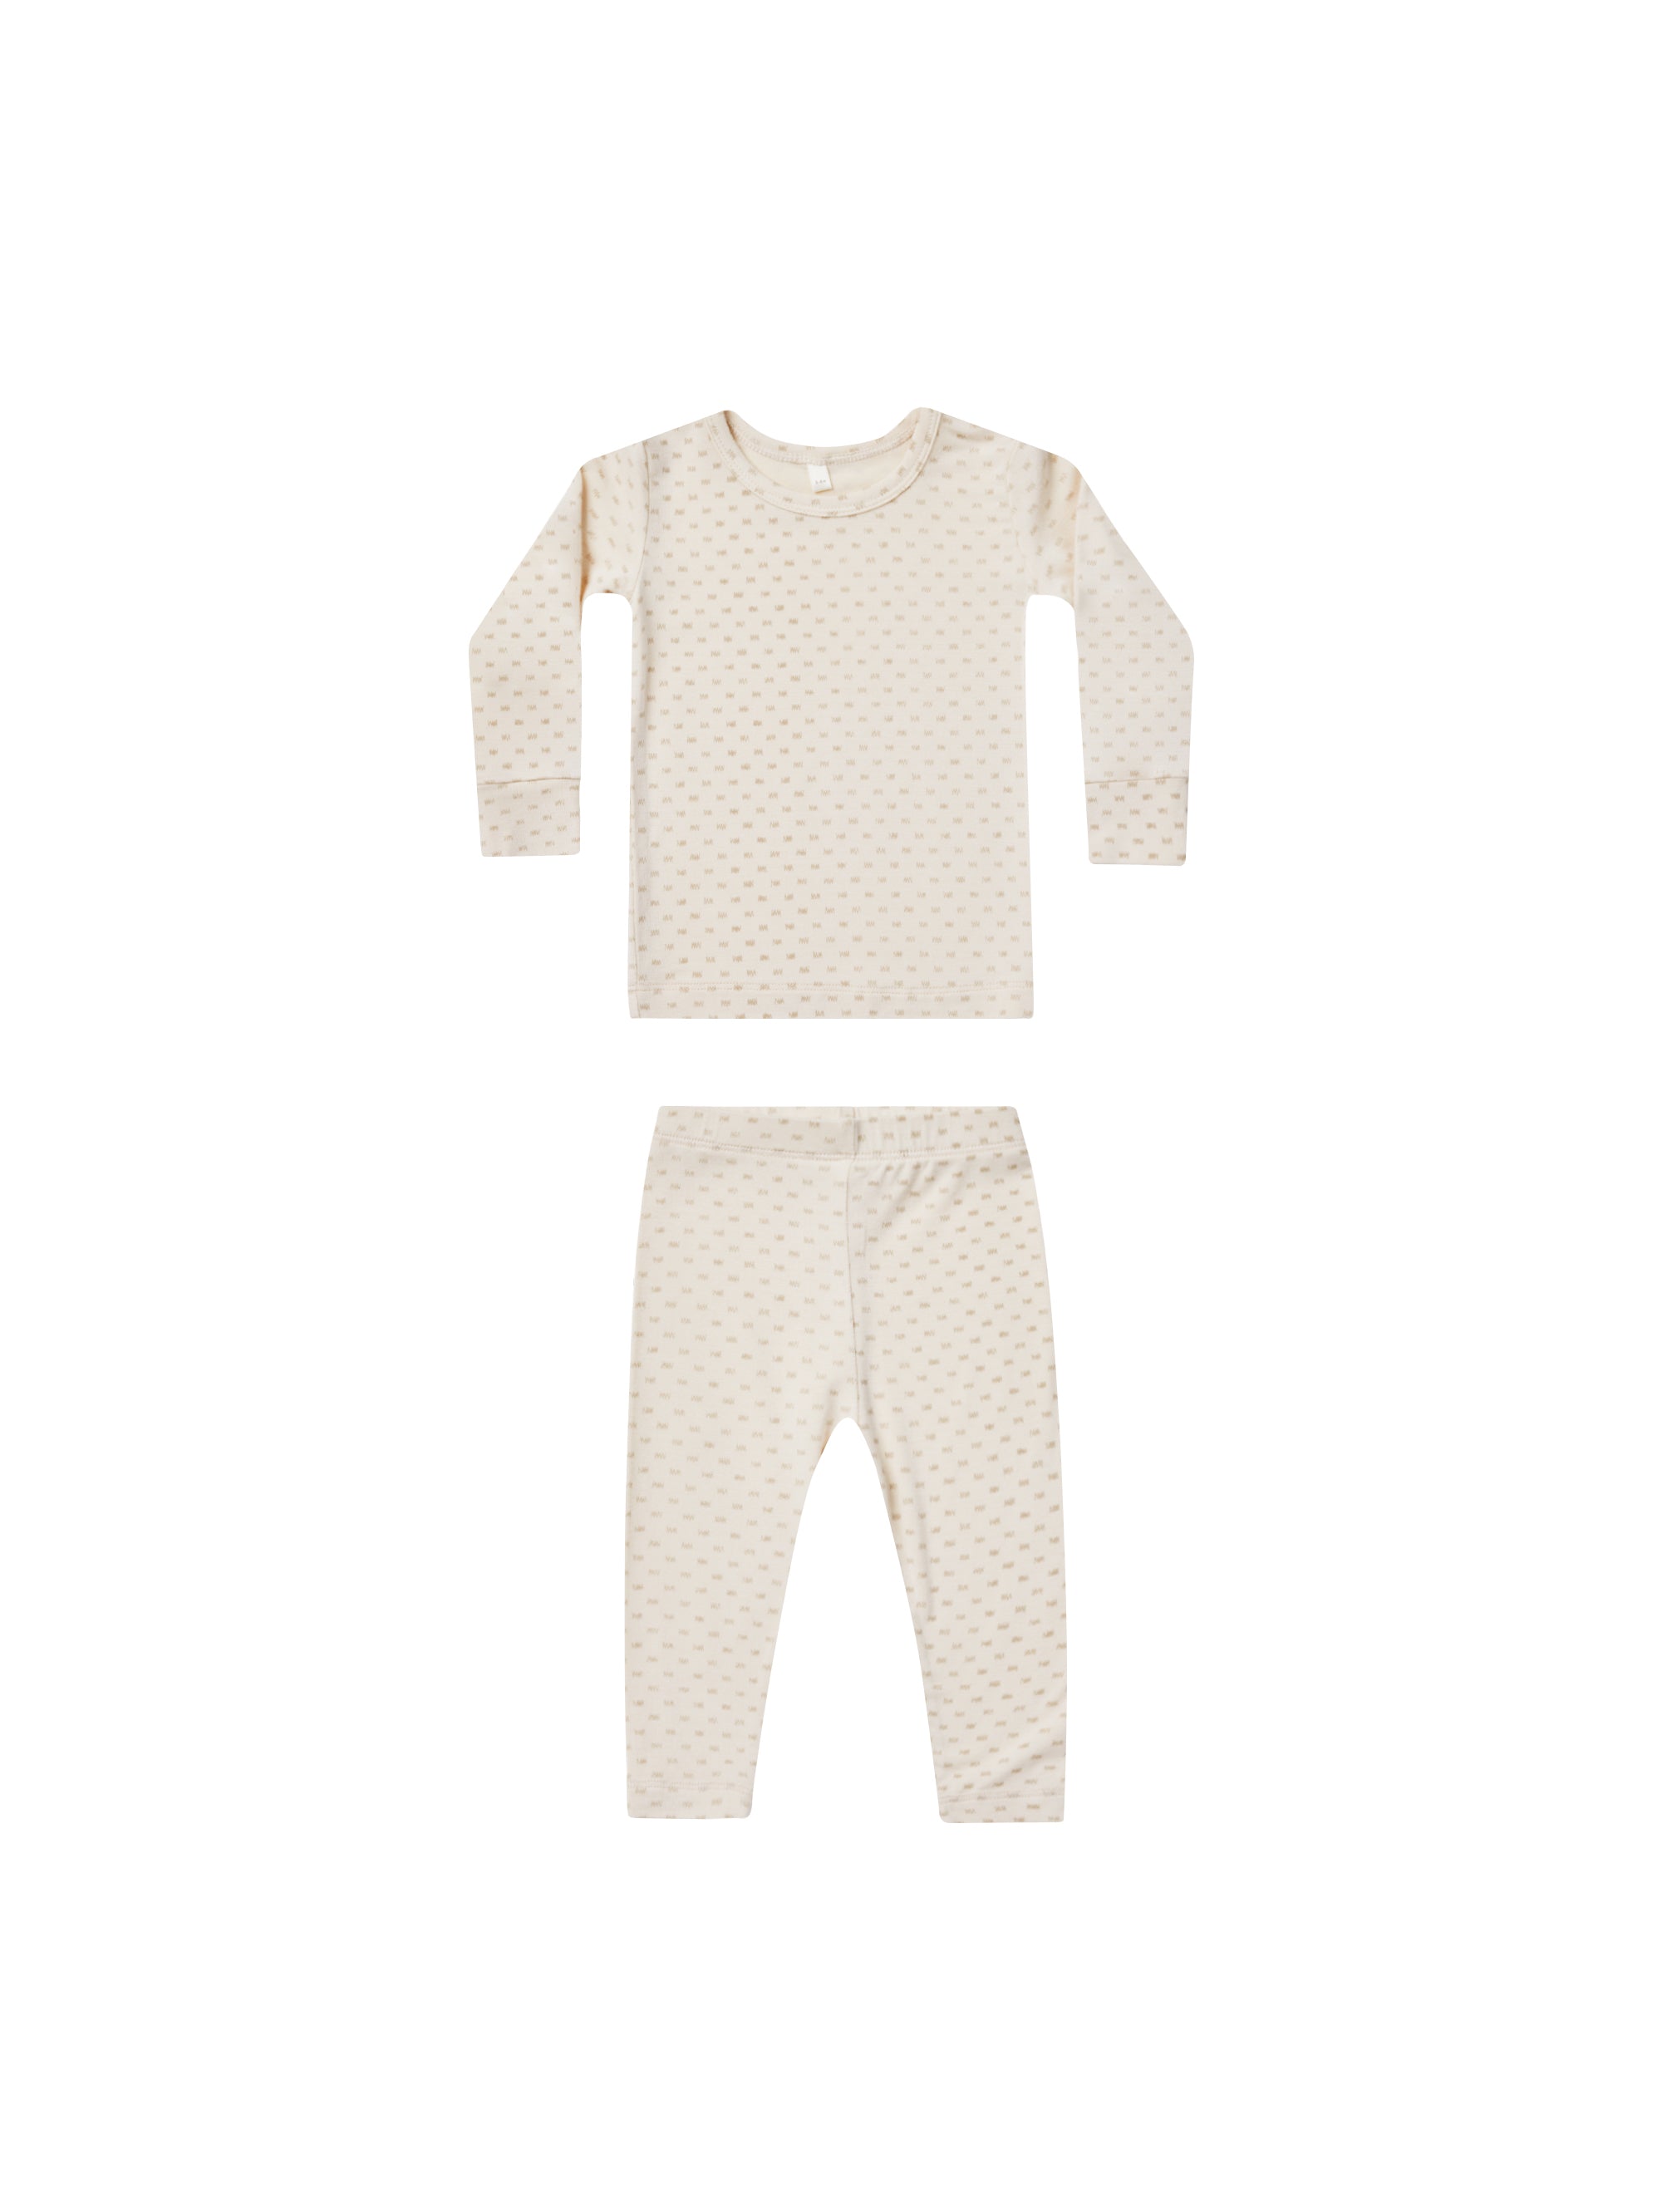 Bamboo Pajama Set - Oat Check - Twinkle Twinkle Little One